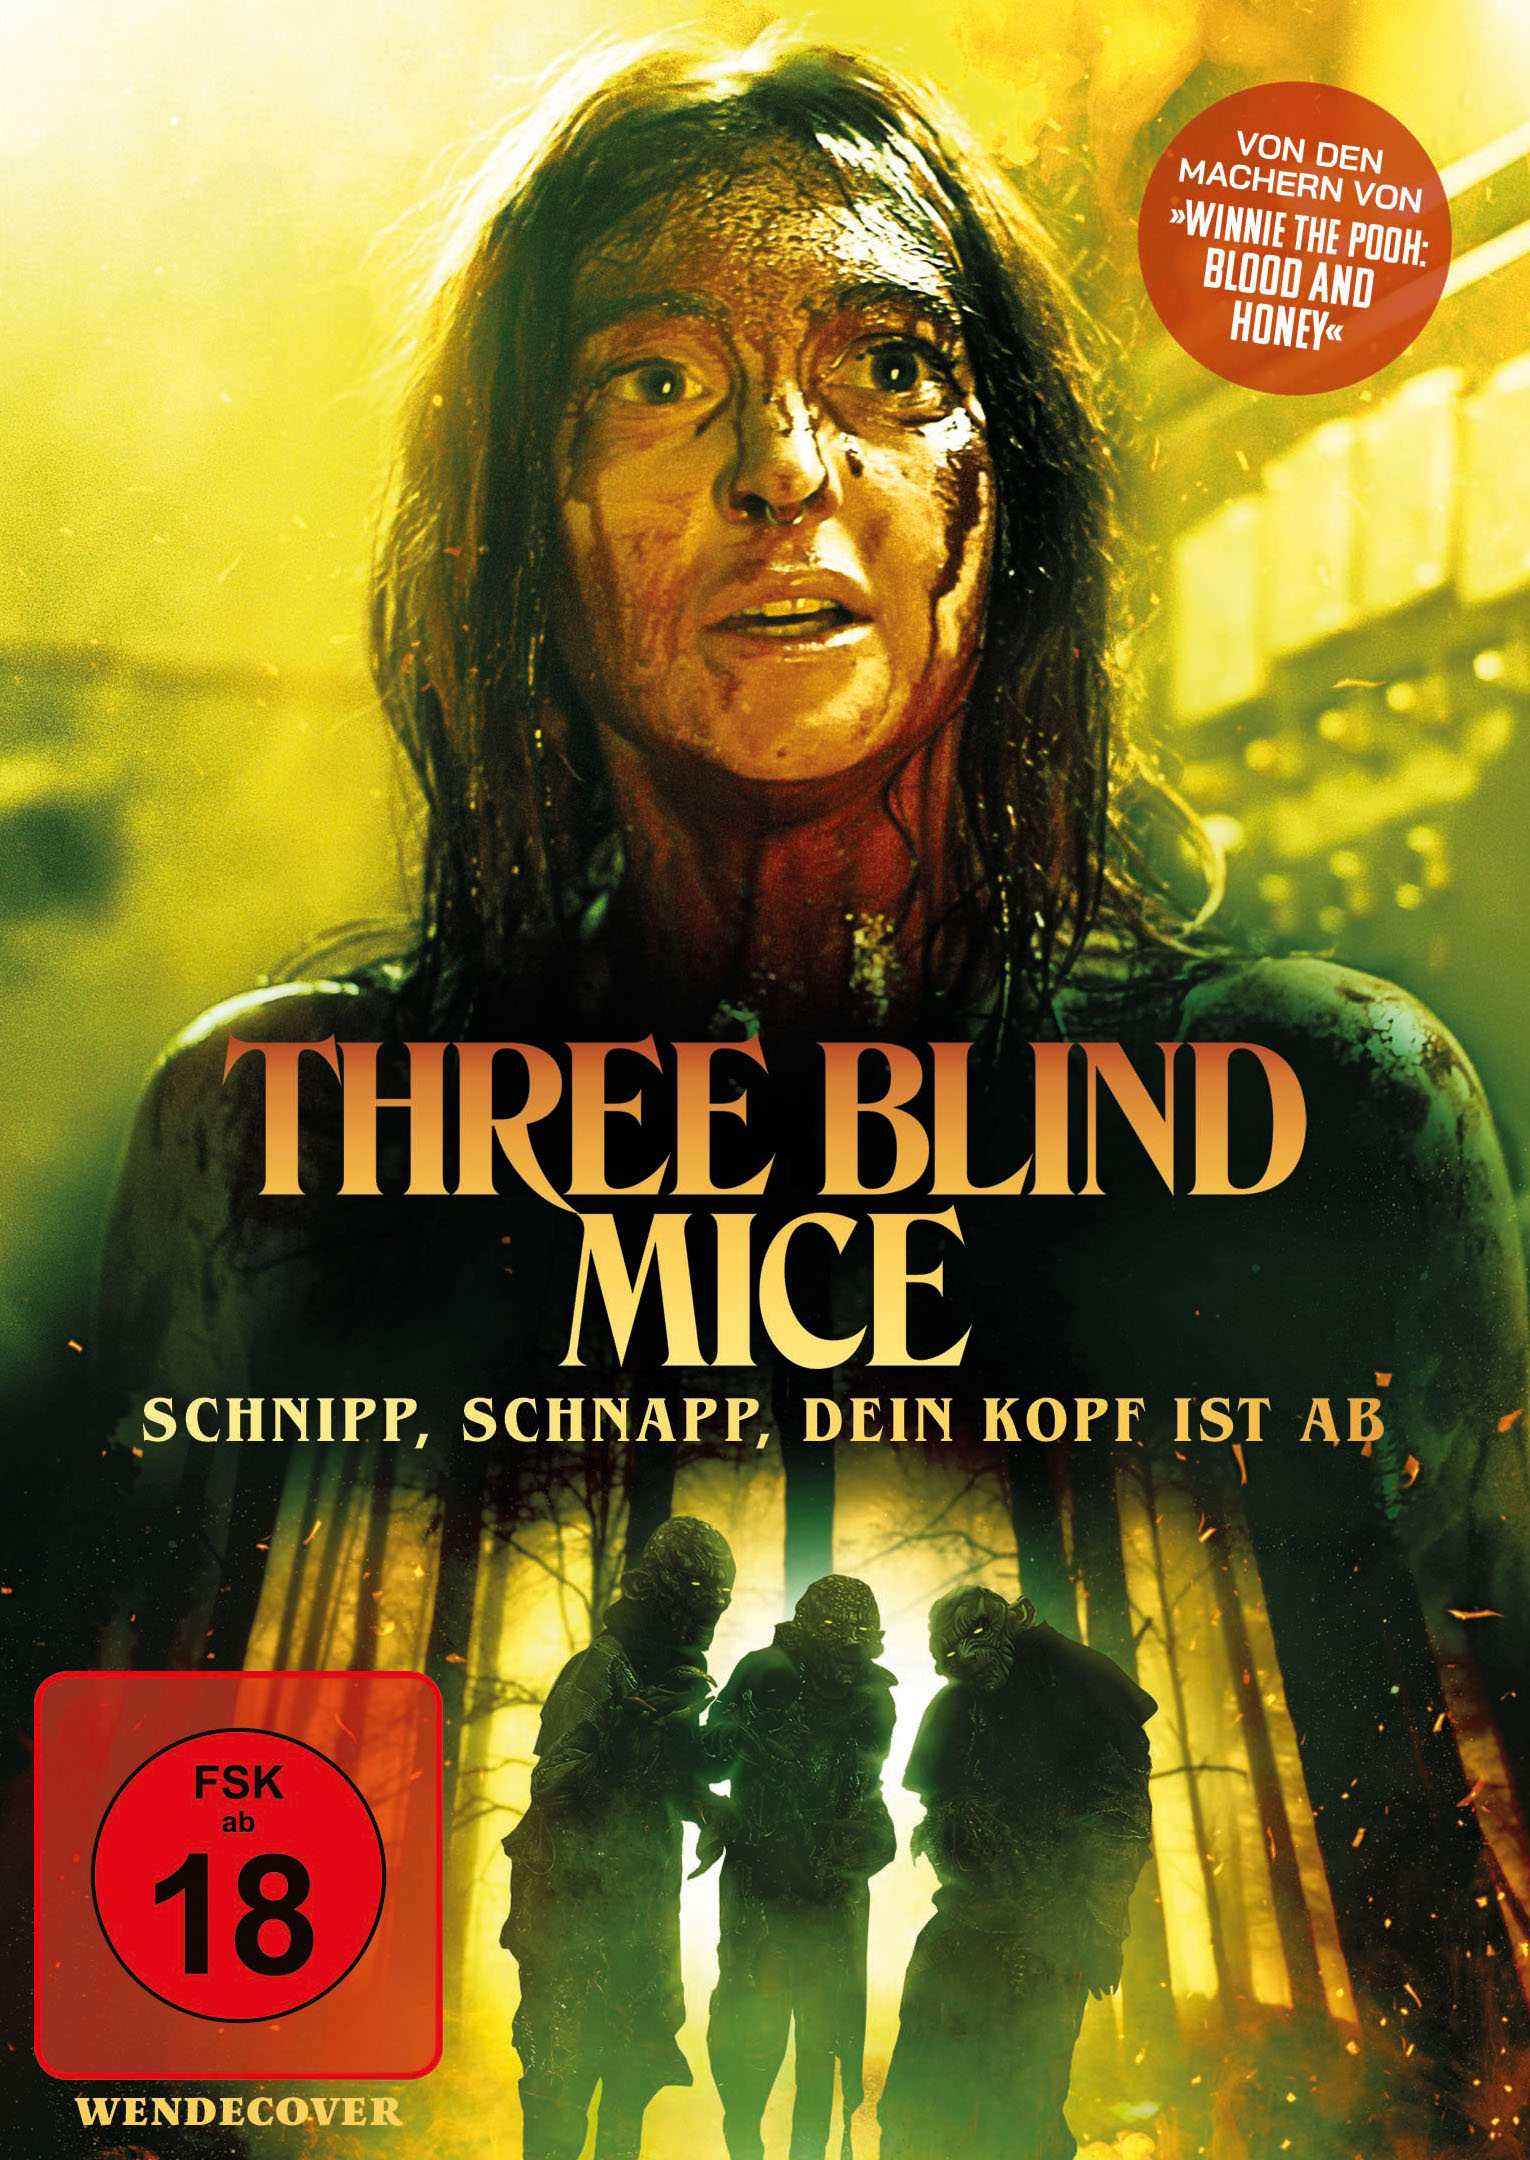 Three Blind Mice - Schnipp, schnapp, dein Kopf ist ab